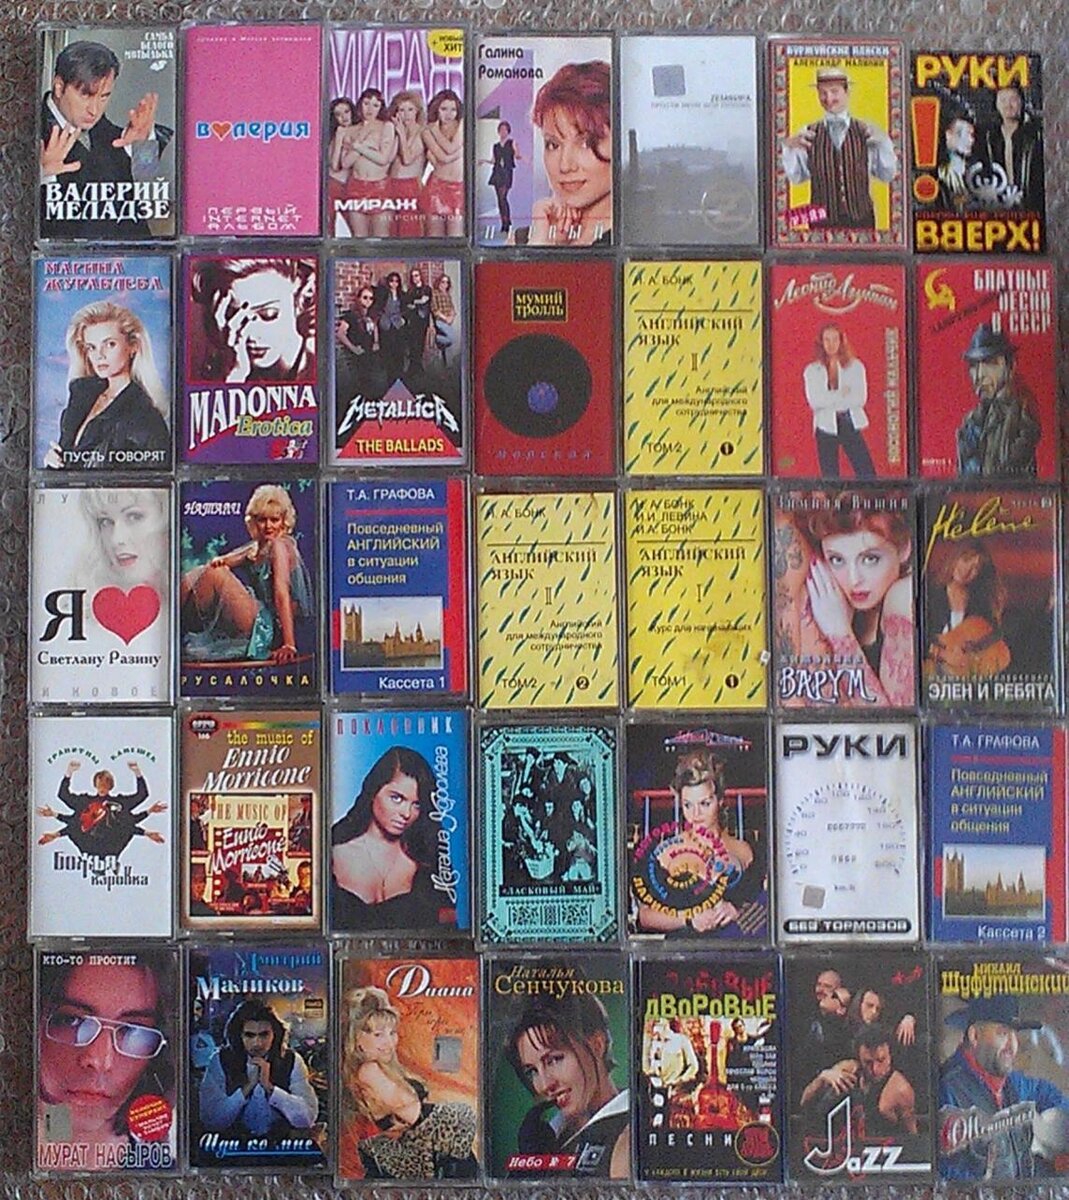 Сборник музыка 90 зарубежные хиты. Магнитофонные кассеты 90-х. Аудиокассеты Techno 90-х. Музыкальные кассеты 90 х. Обложки кассет 90-х зарубежные.